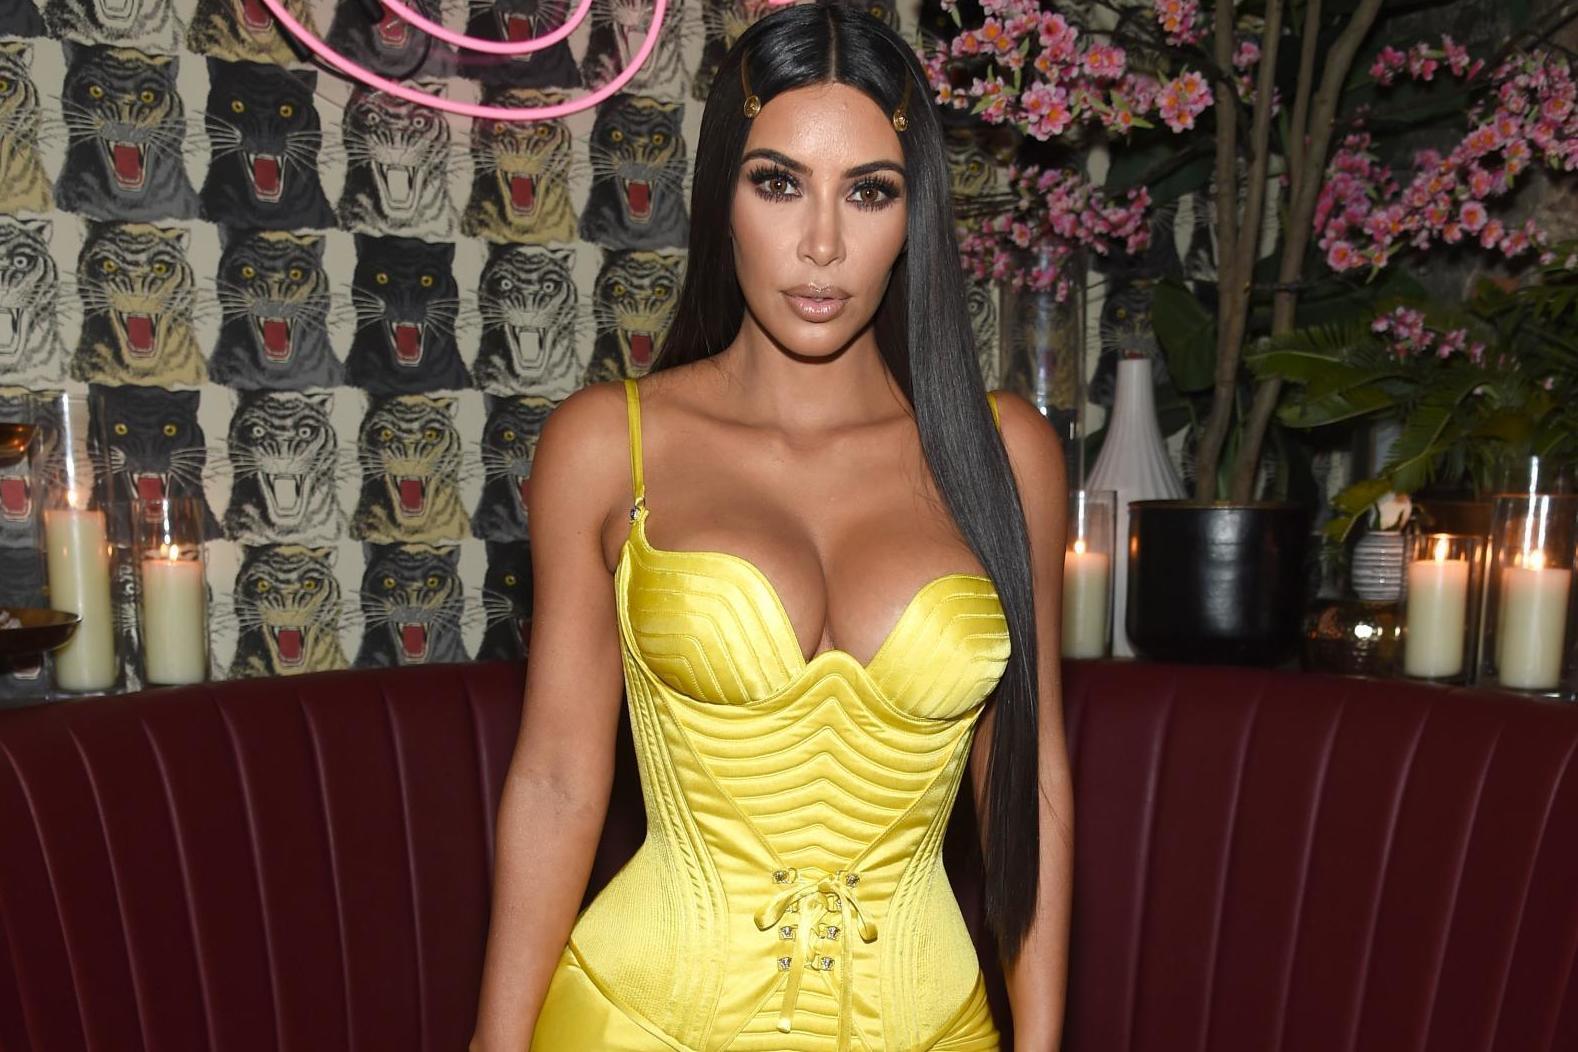 Kim Kardashian launches new shapewear line called Kimono